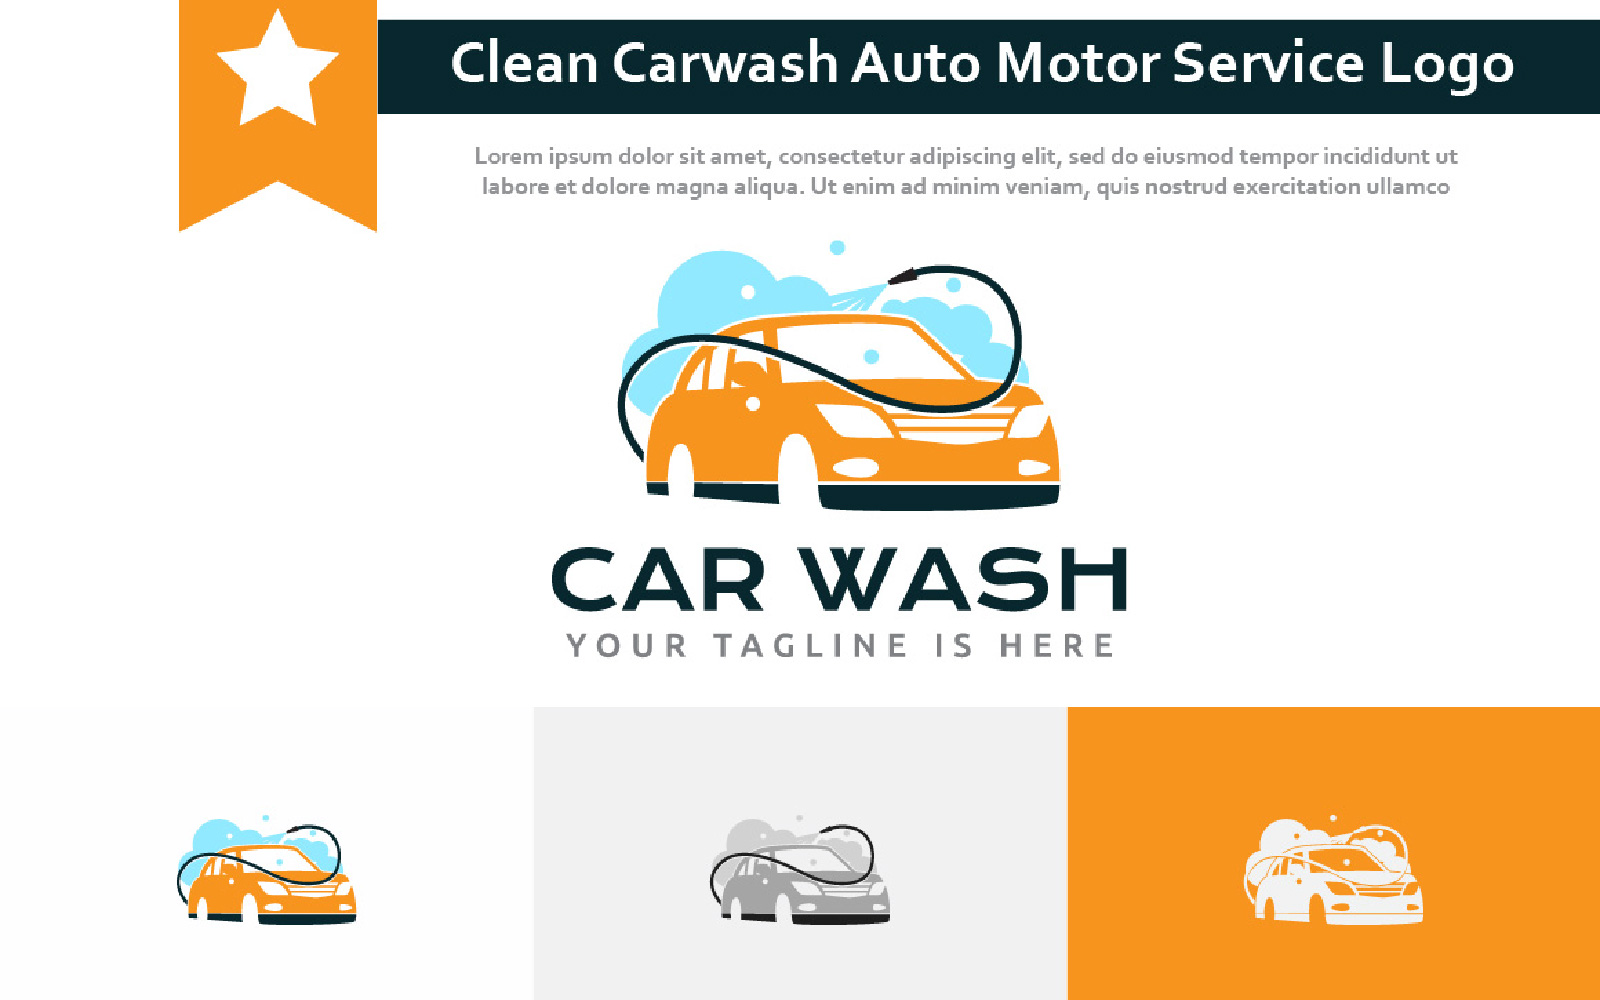 Shower Hose Clean Car Wash Carwash Auto Motor Service Logo